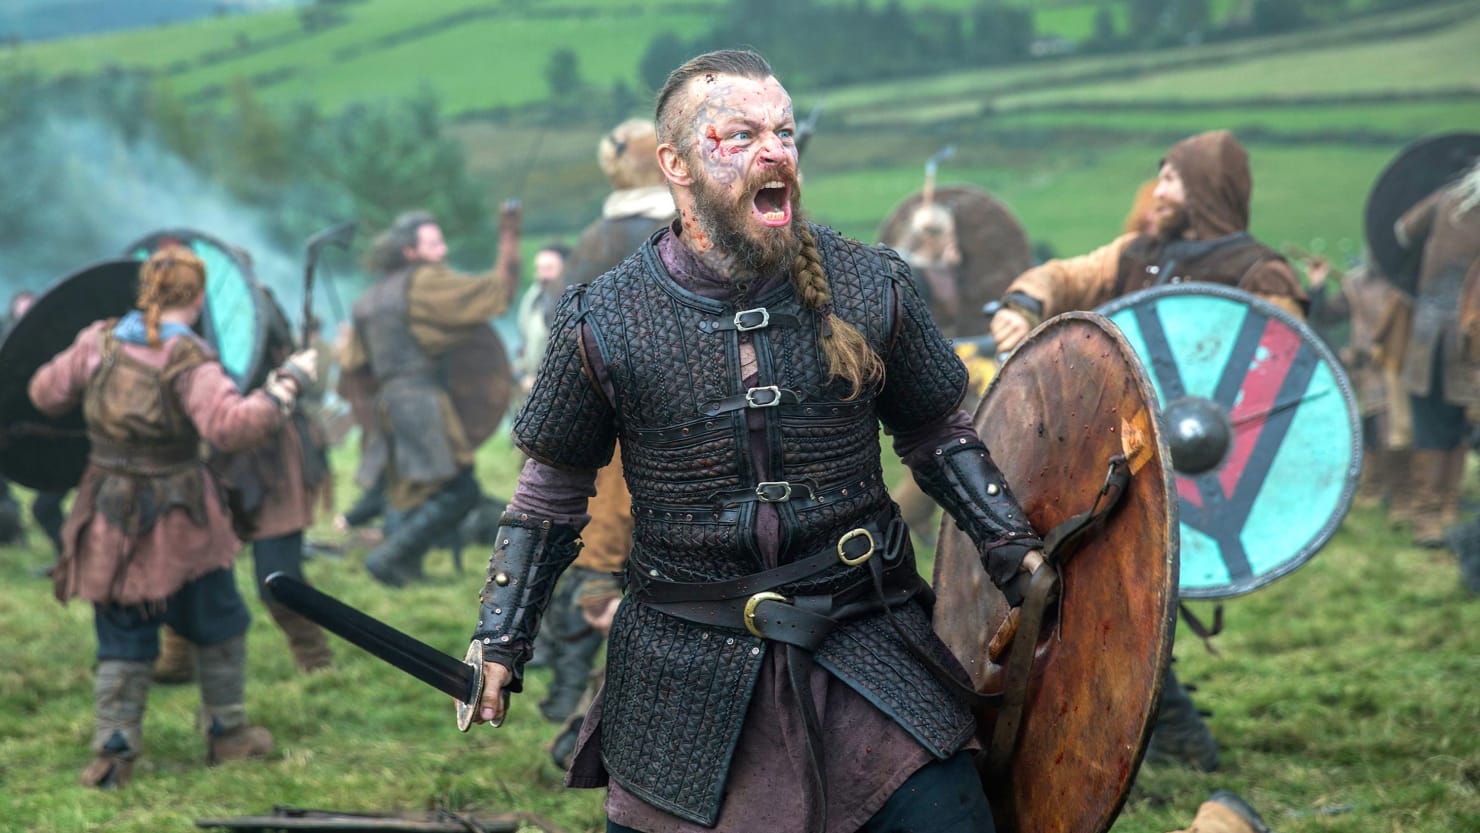 The True History Behind Netflix's 'Vikings: Valhalla